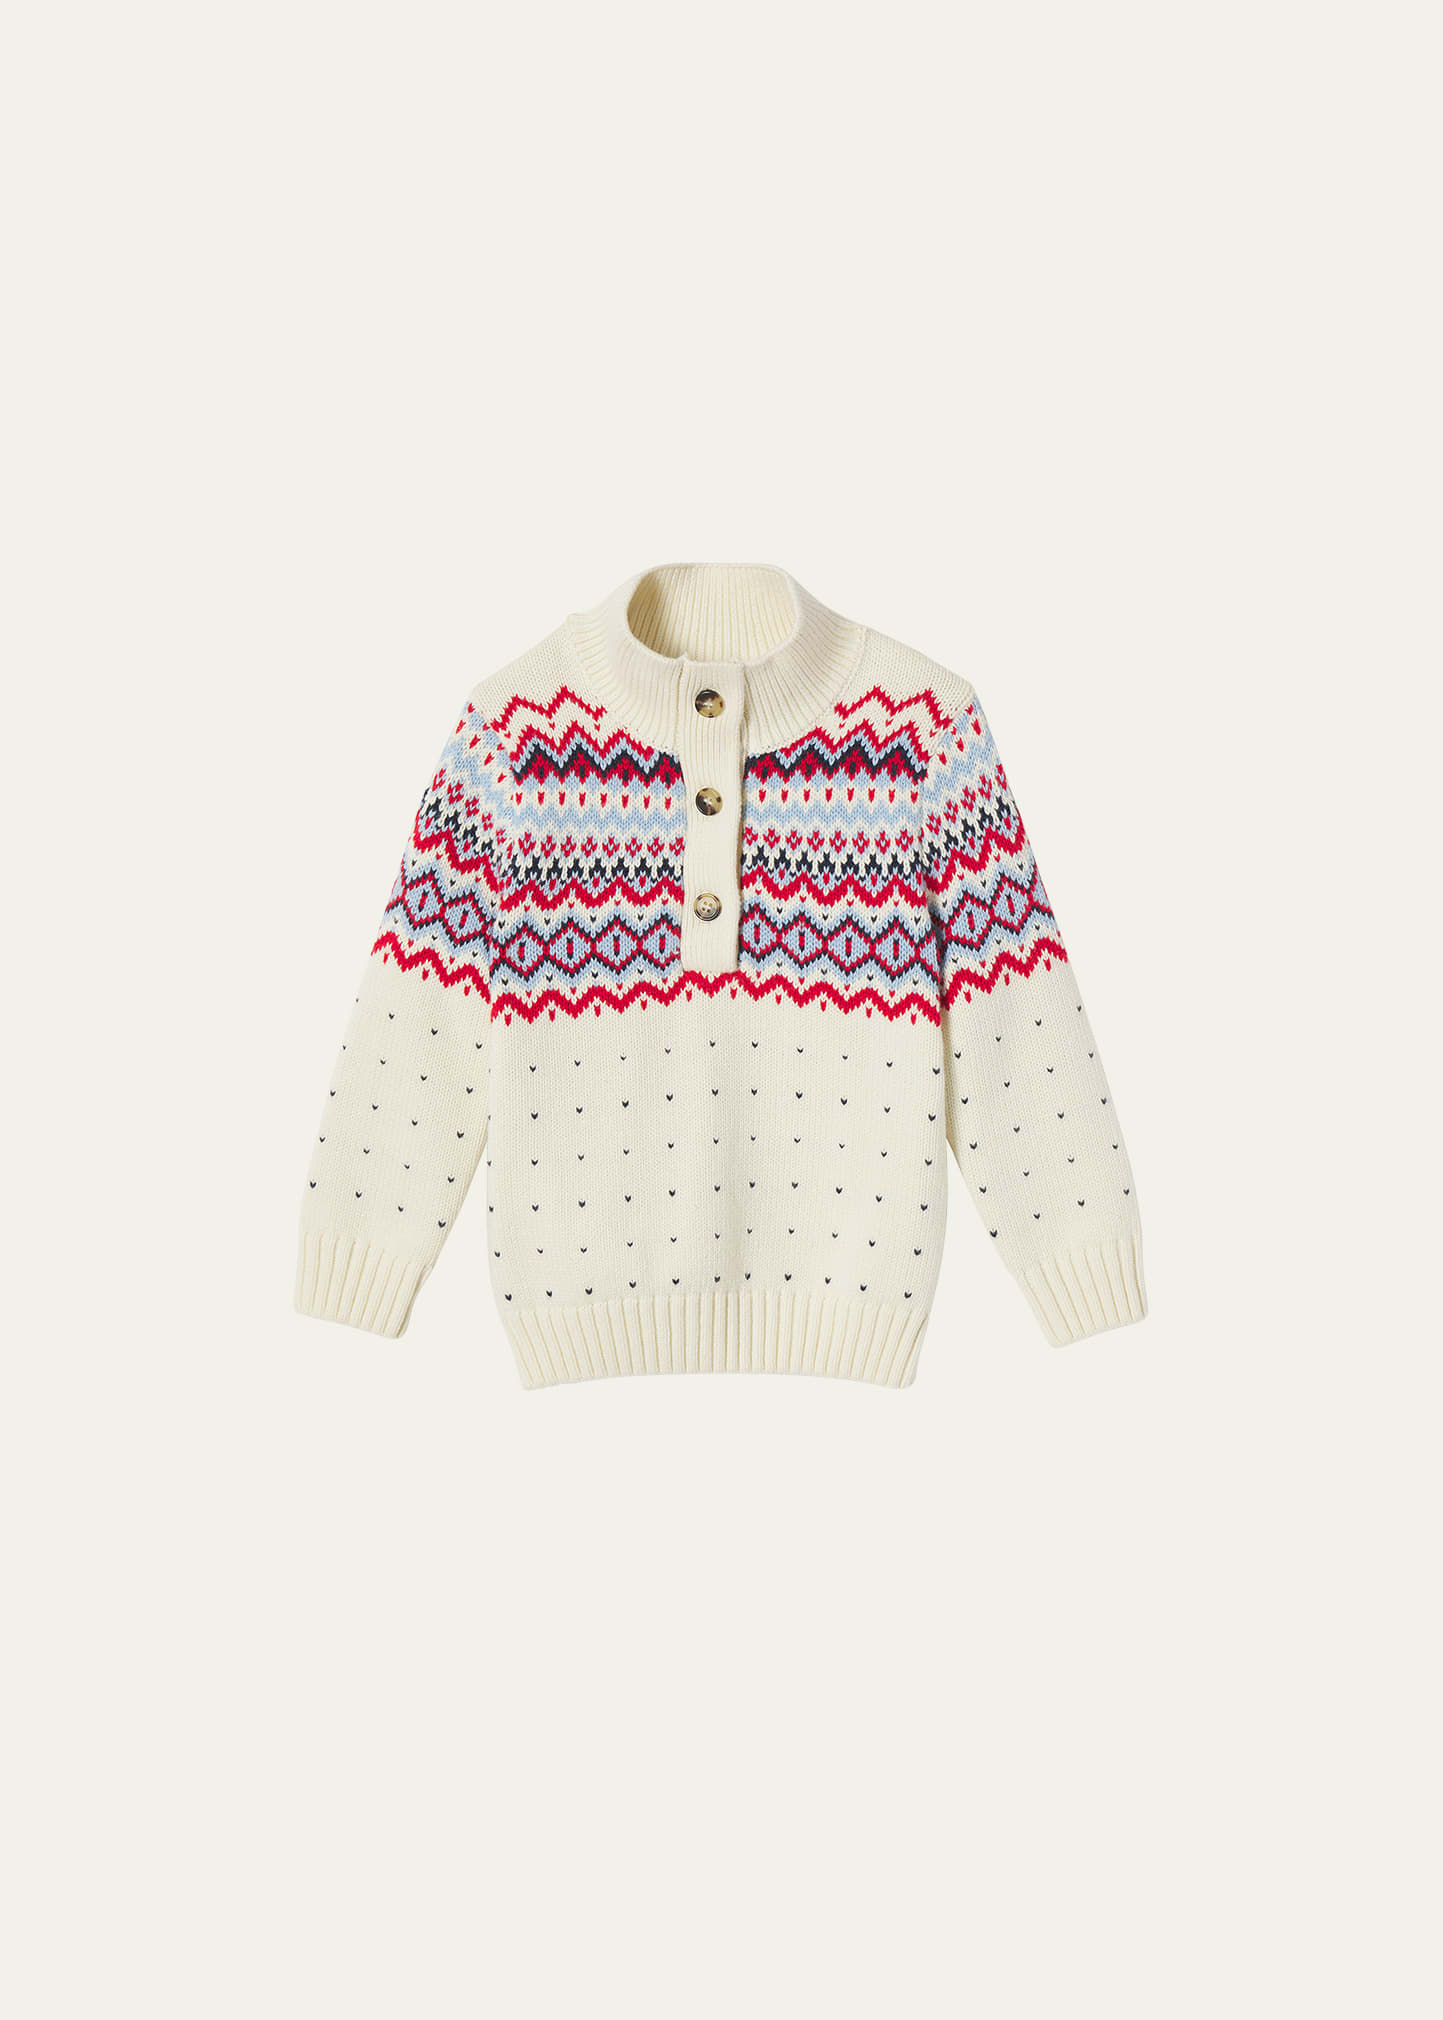 Classic Prep Childrenswear Boy's Scott Fair Isle Sweater, Size 9M-14Y